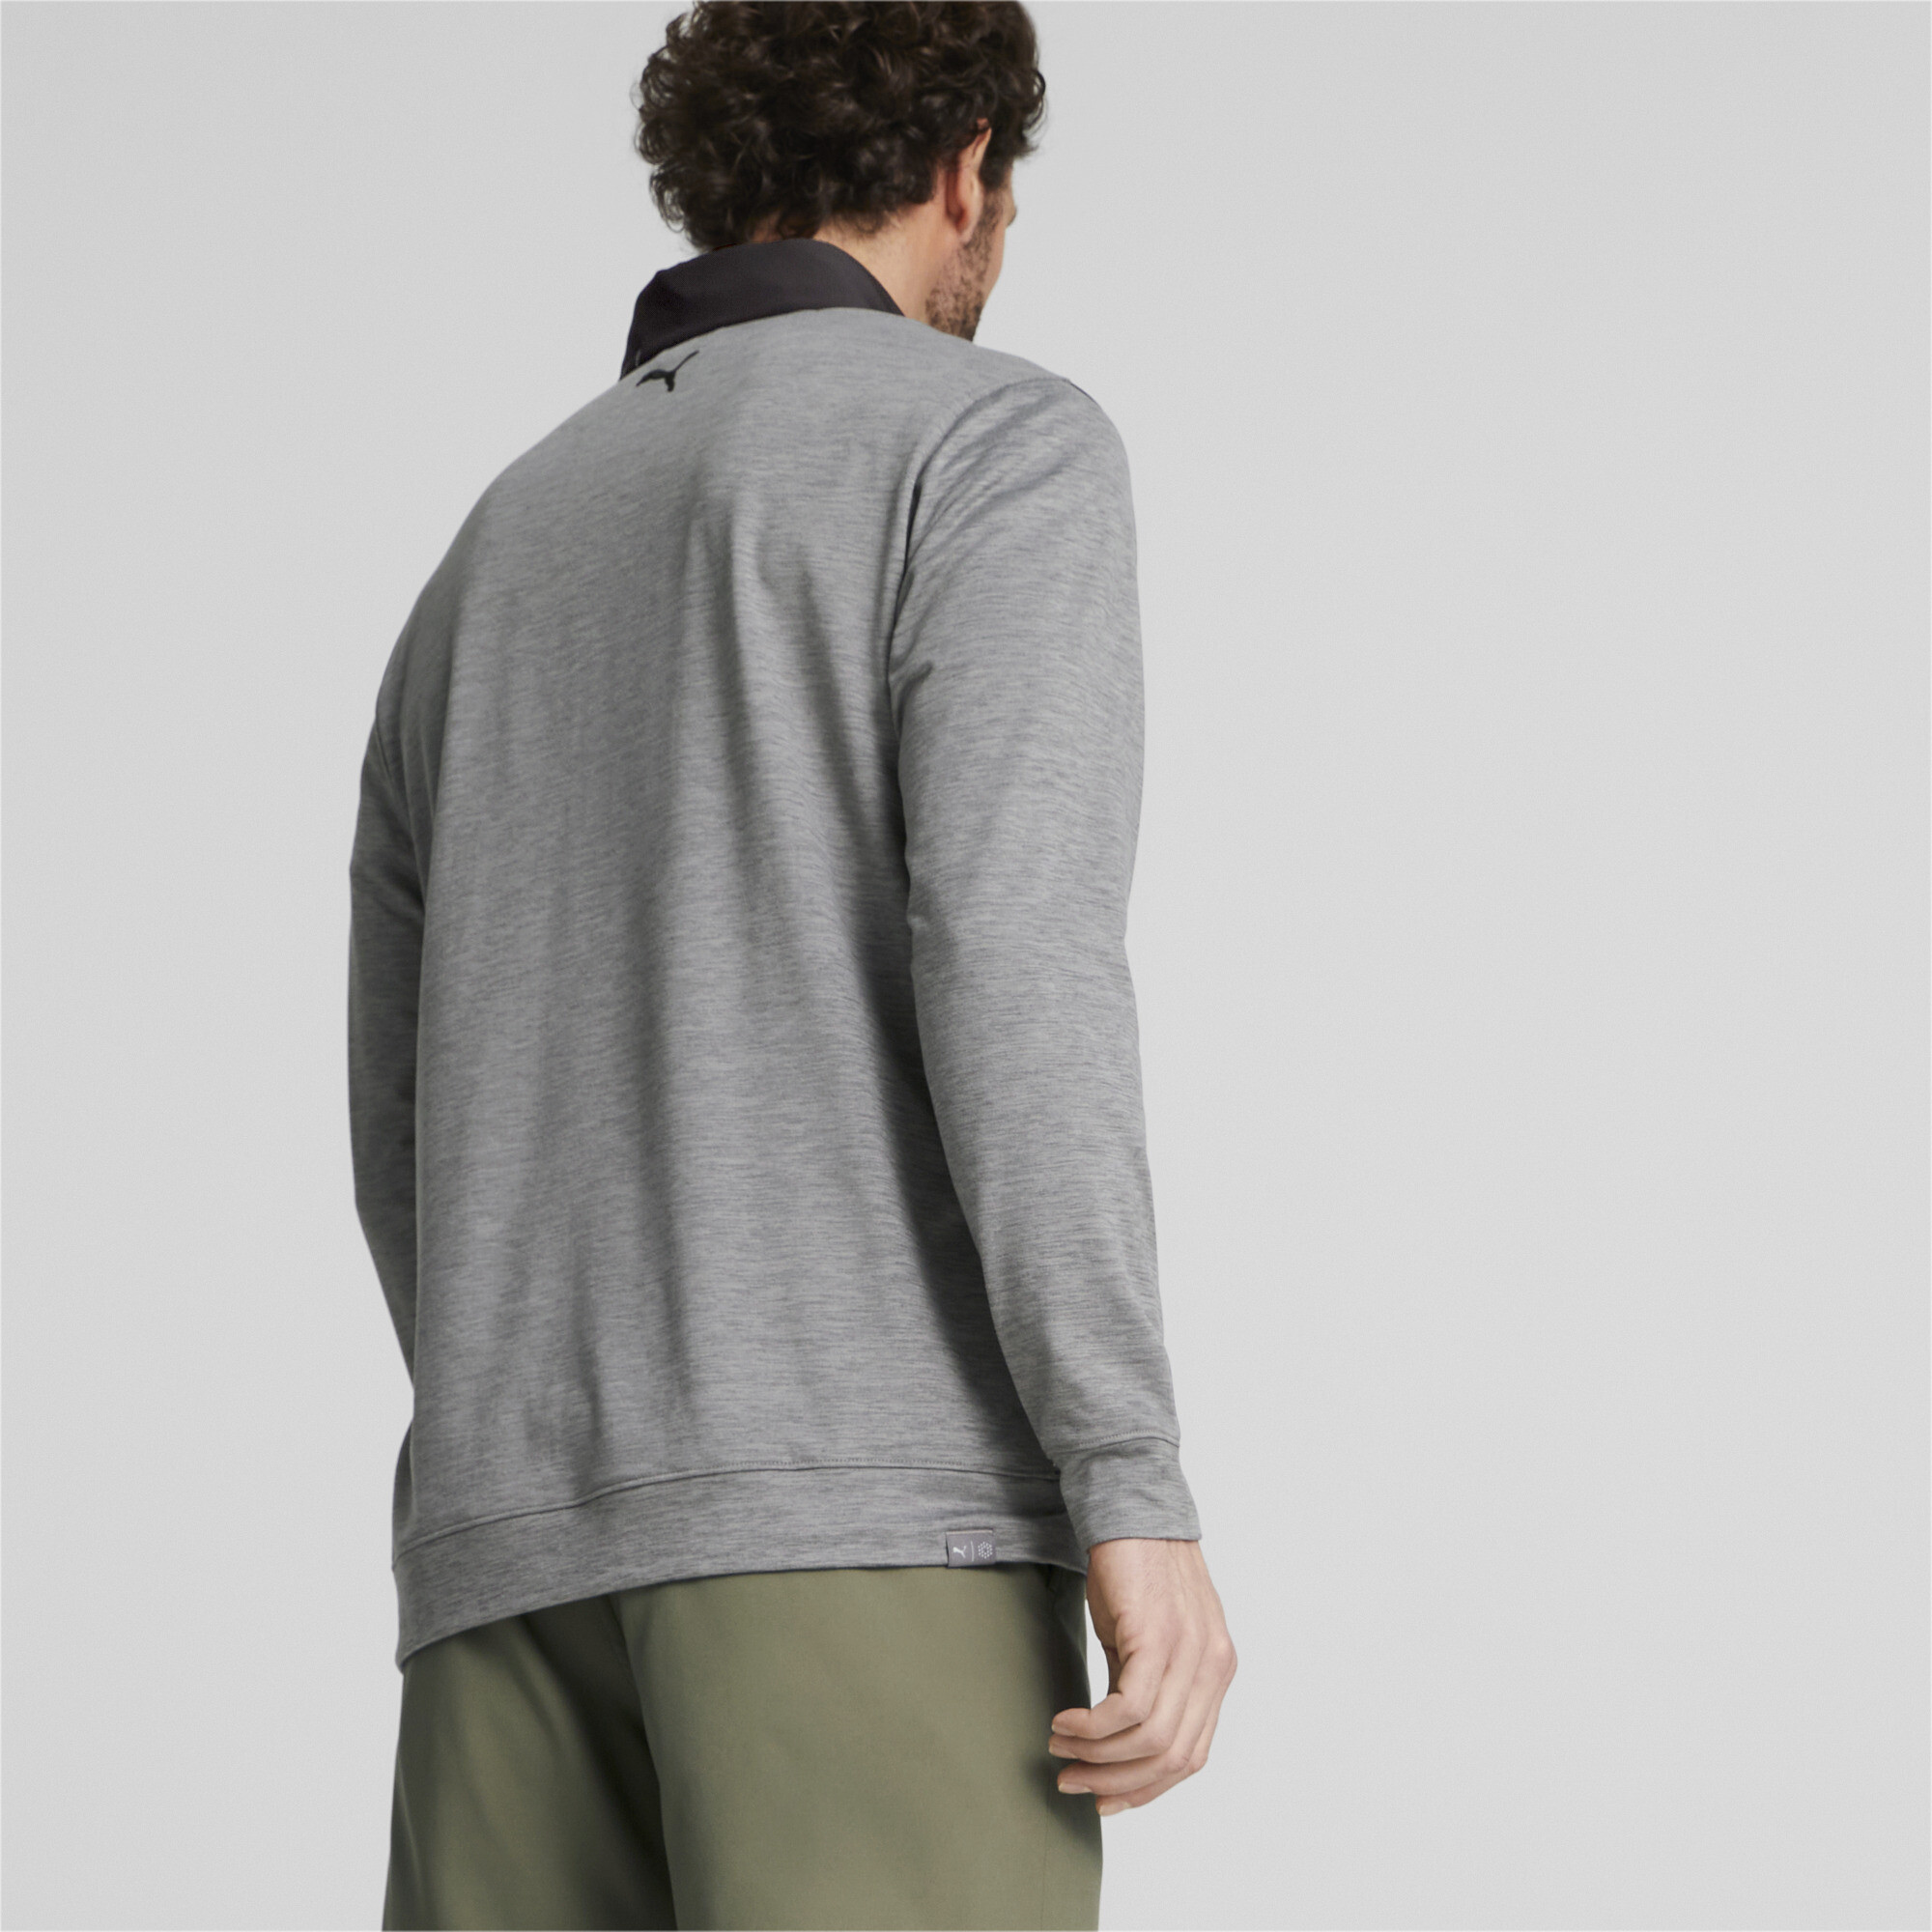 Men's Puma Cloudspun Colourblock Quarter-Zip Golf Sweatshirt Top, Black Top, Size S Top, Sport